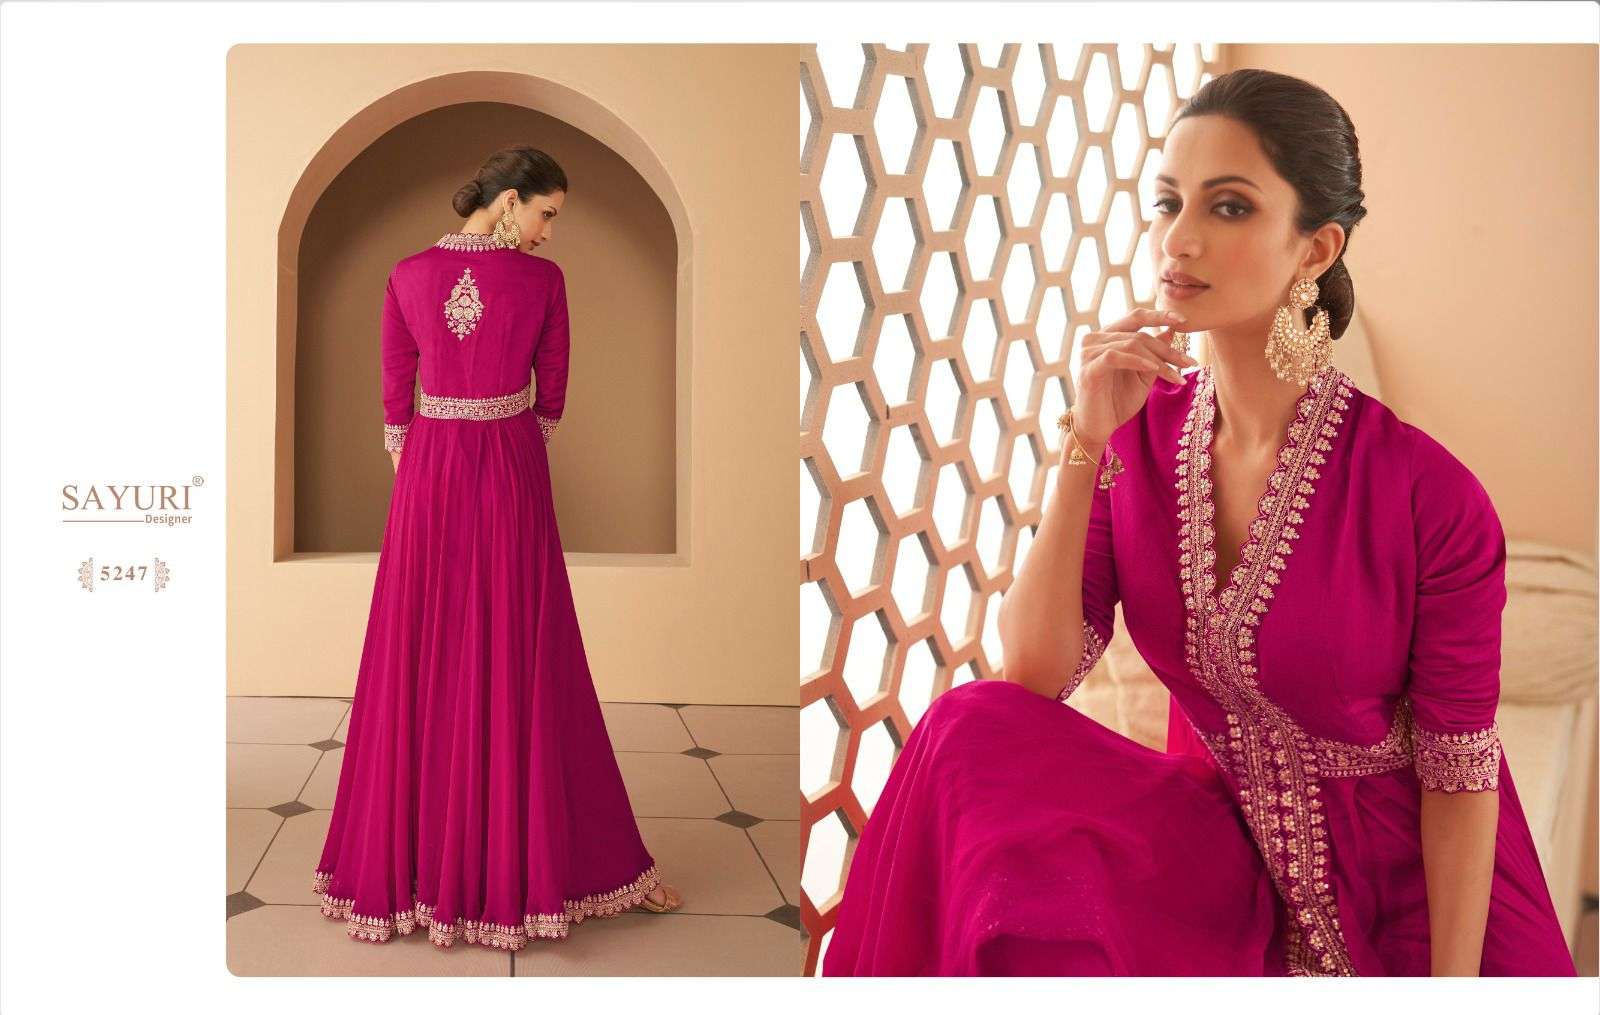 sayuri designer begum 5246-5248 series designer party wear salwar kameez wholesale price 